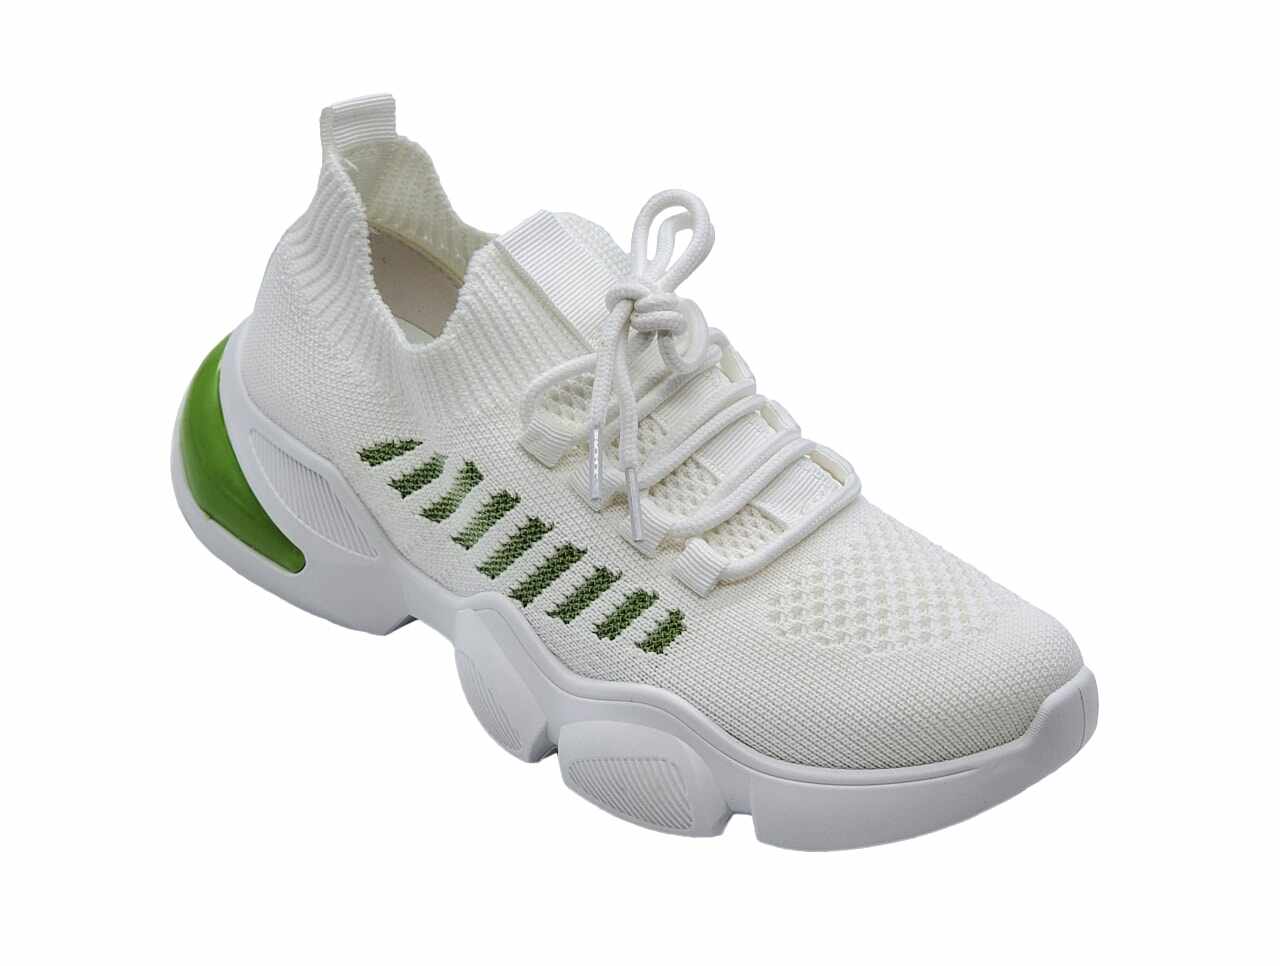 Pantofi sport dama, marca Feeling, culoare alb cu insertii verzi, din material textil, cod 6690-WHT